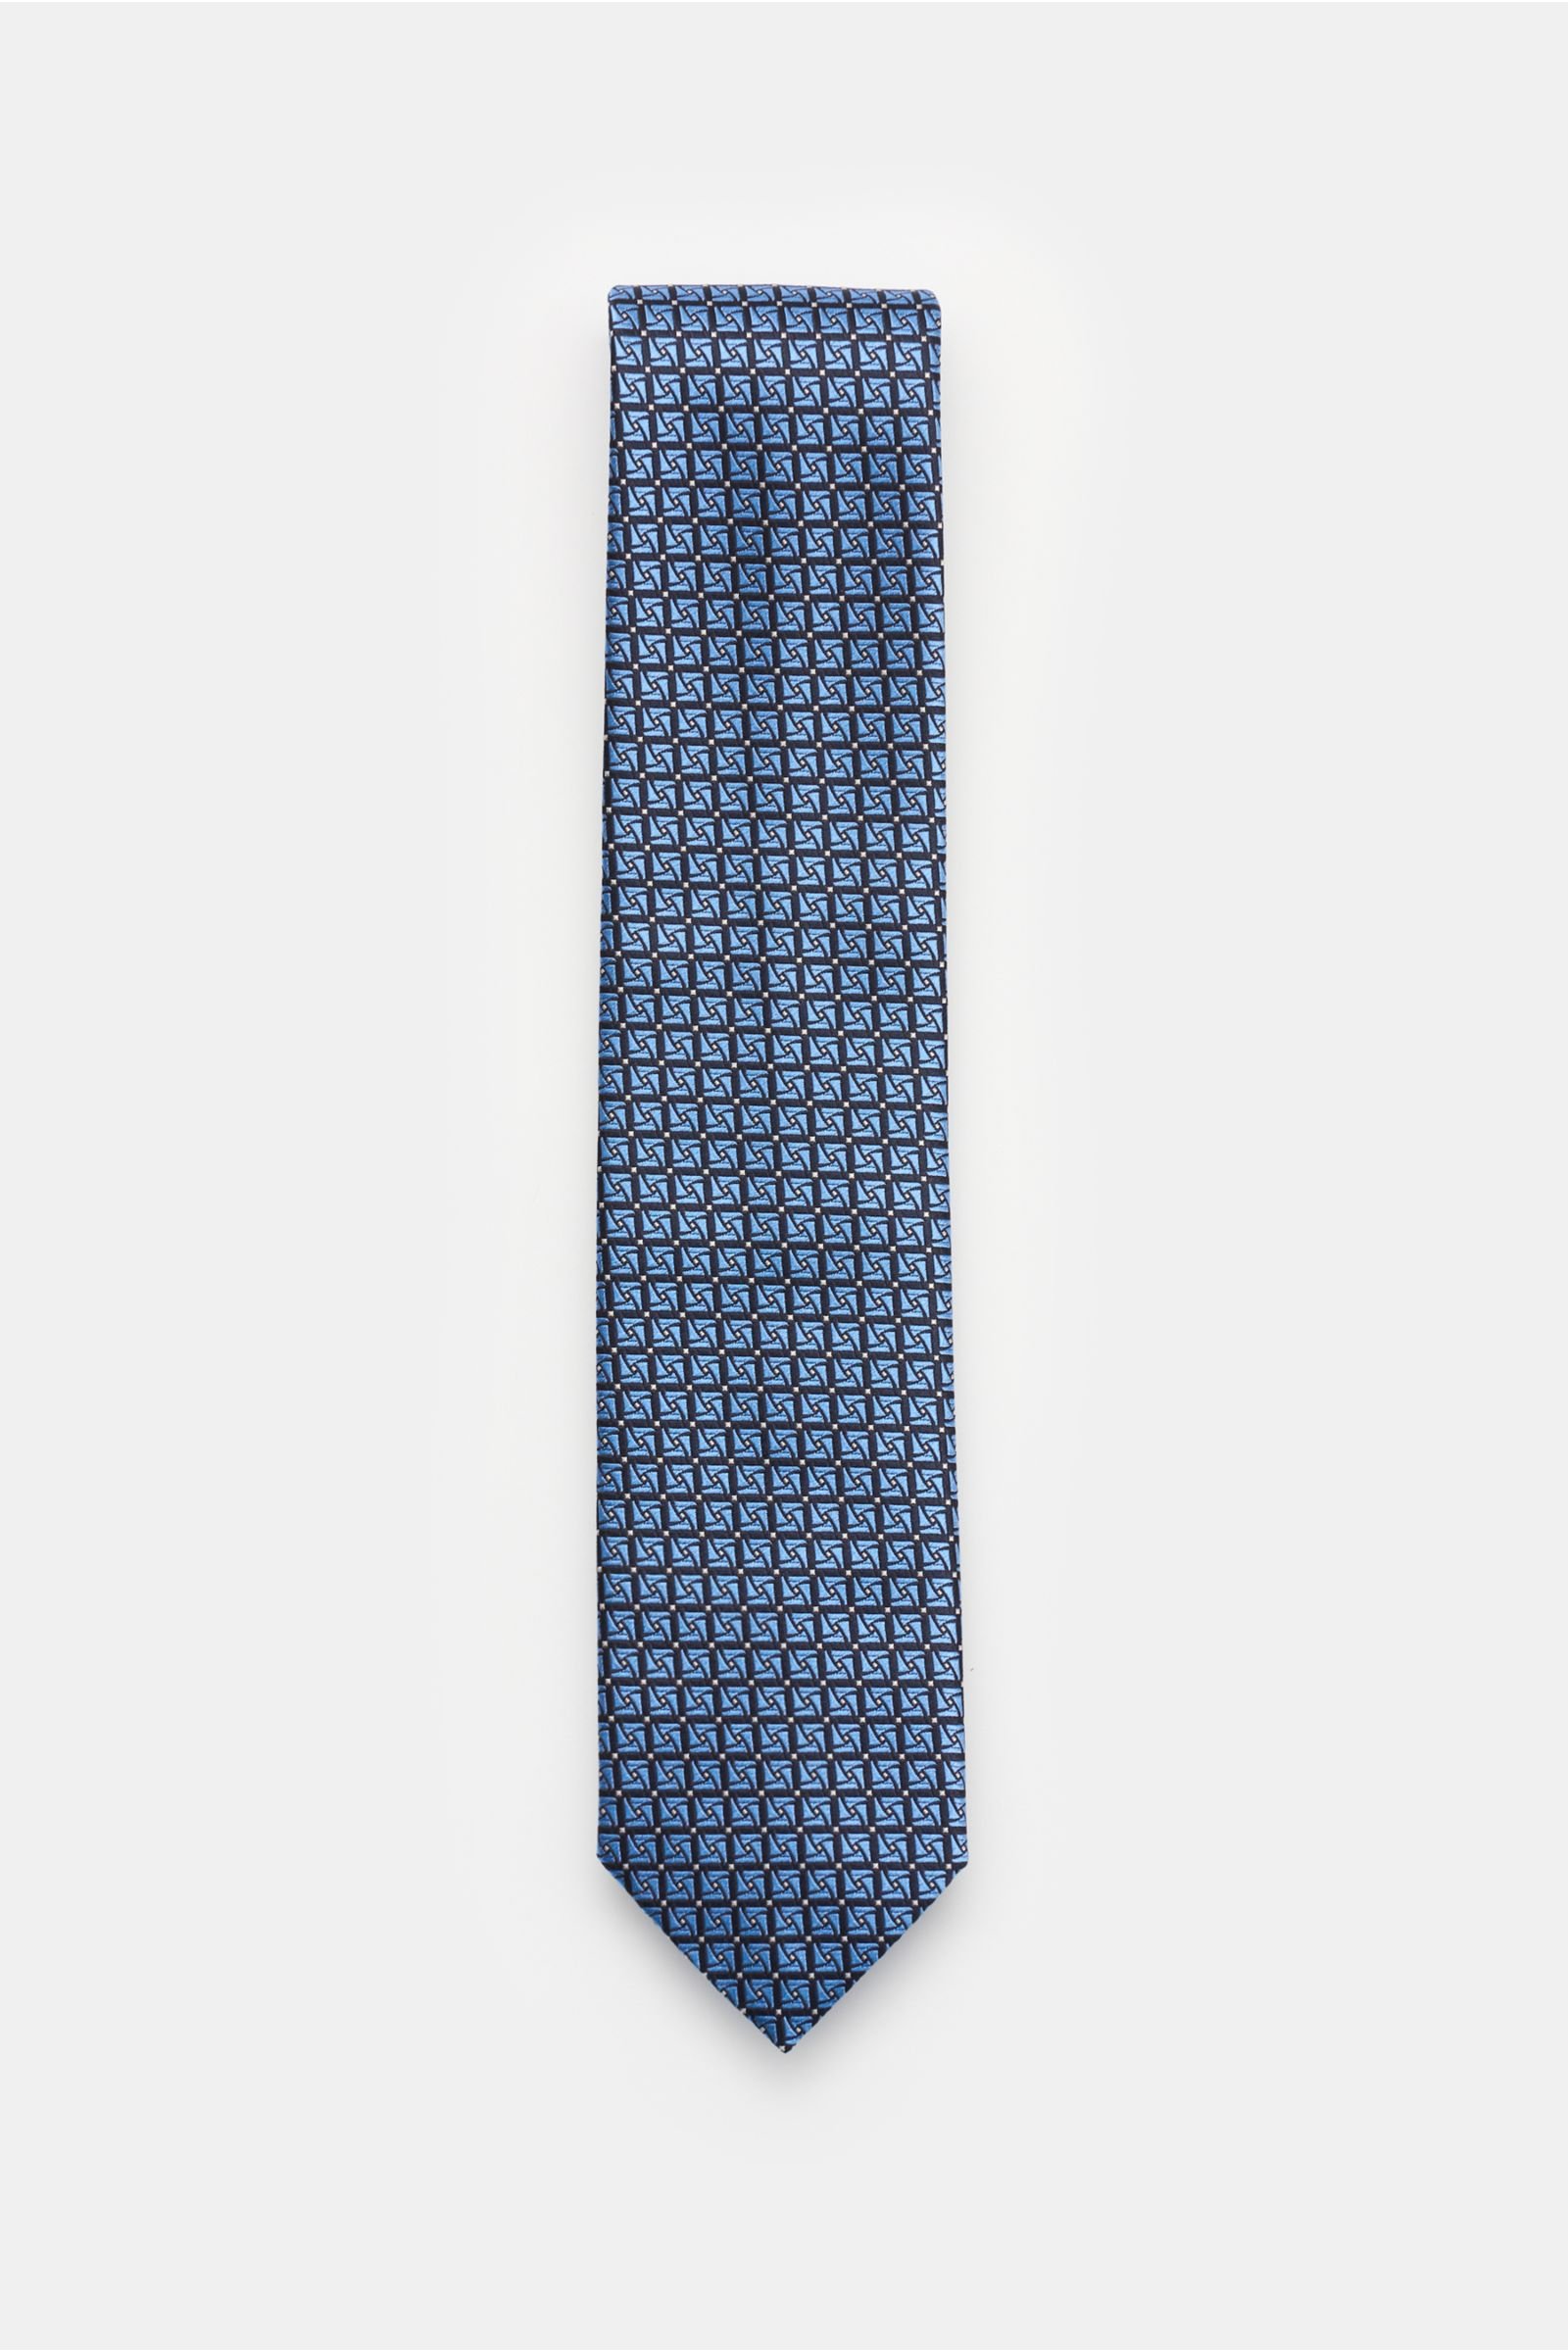 Silk tie light blue patterned